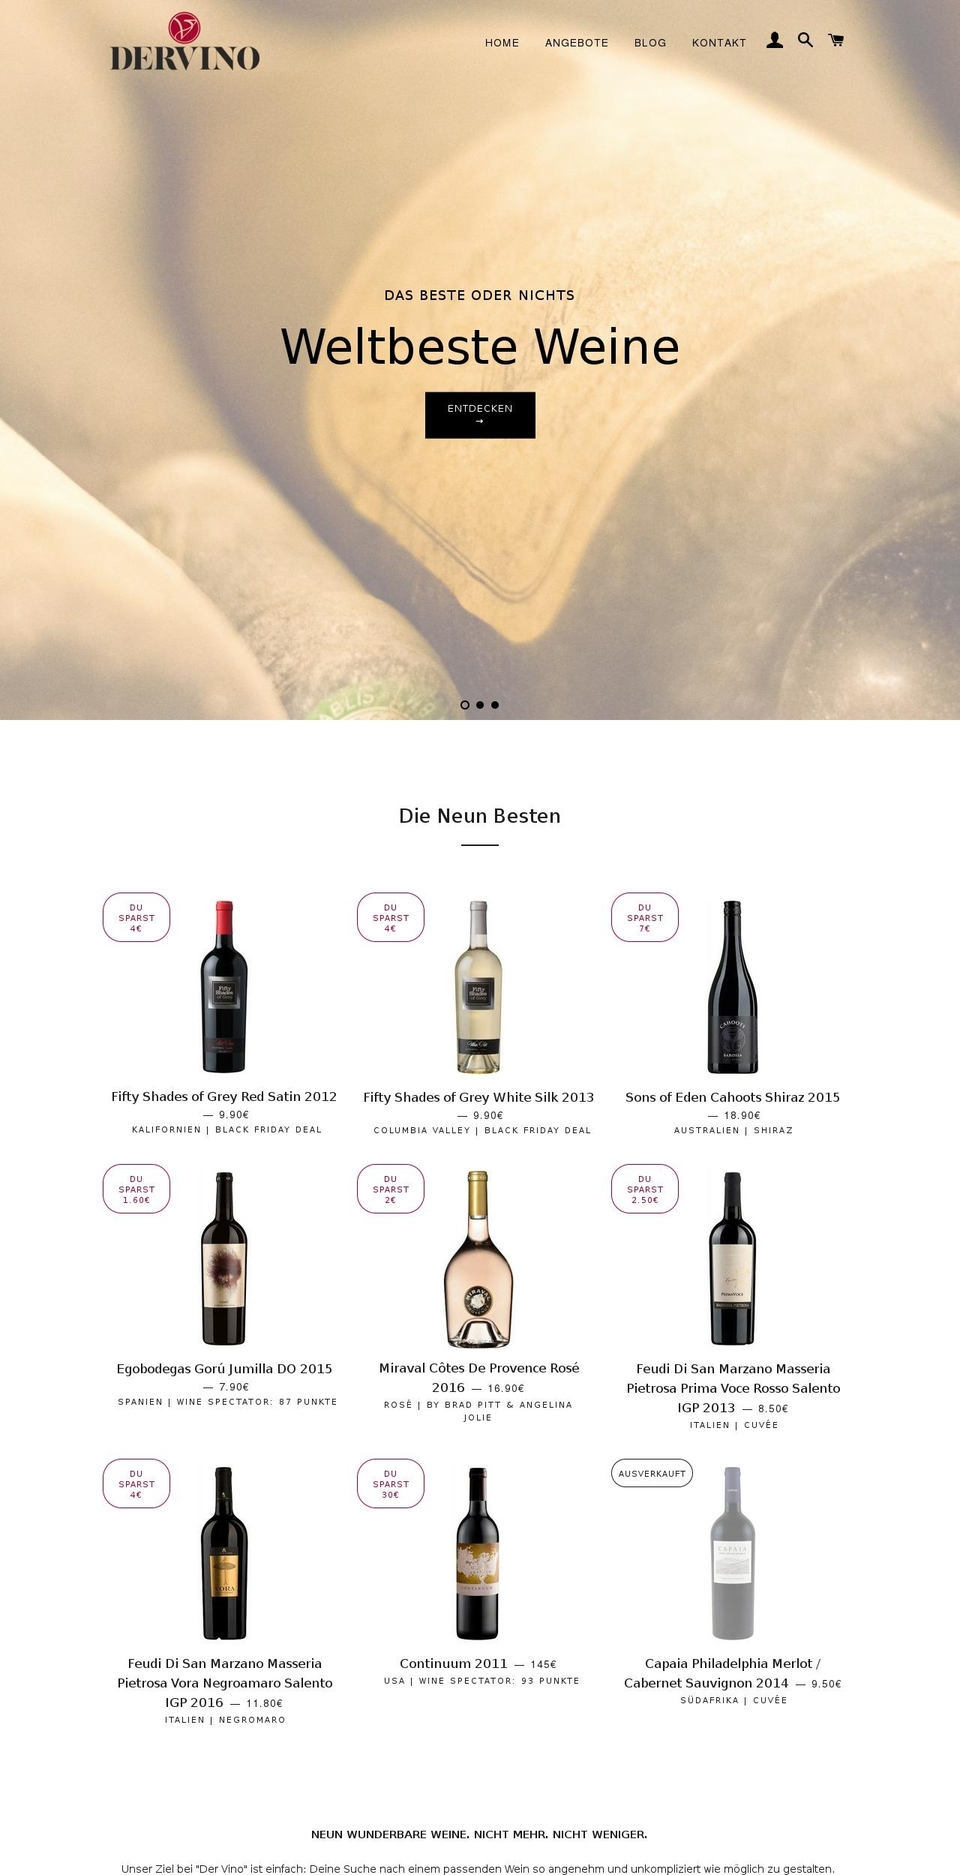 LATEST BACKUP Der Vino Brooklyn Juni 2017 Shopify theme site example dervino.com